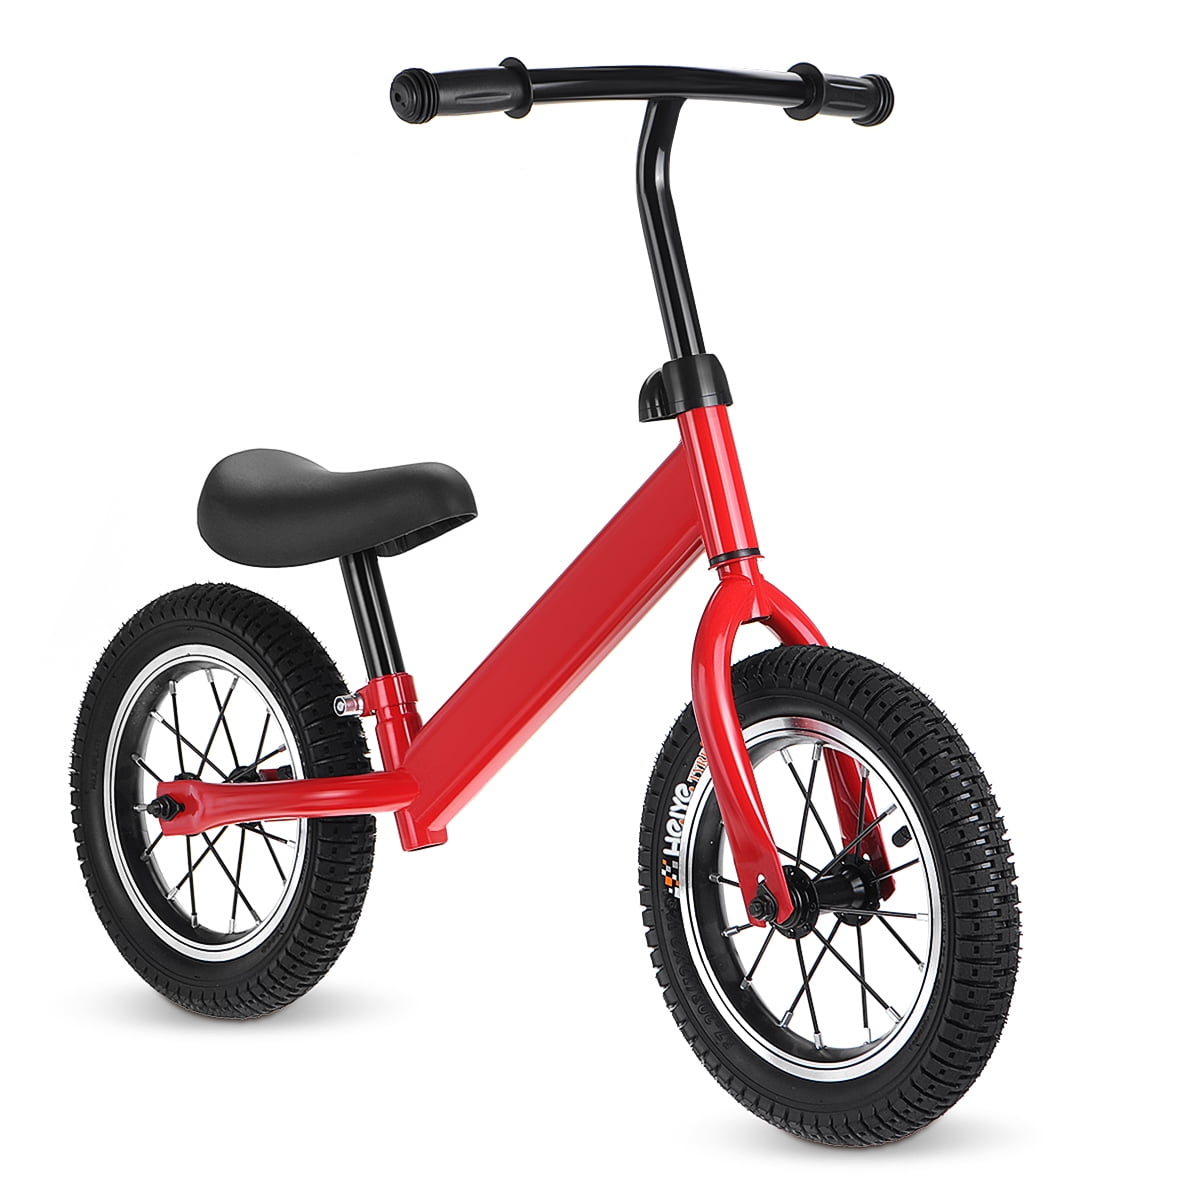 Details about   12" Balance Bike Kids Children No-Pedal Ride Bike Adjustable Seat Boy Girls Gift 